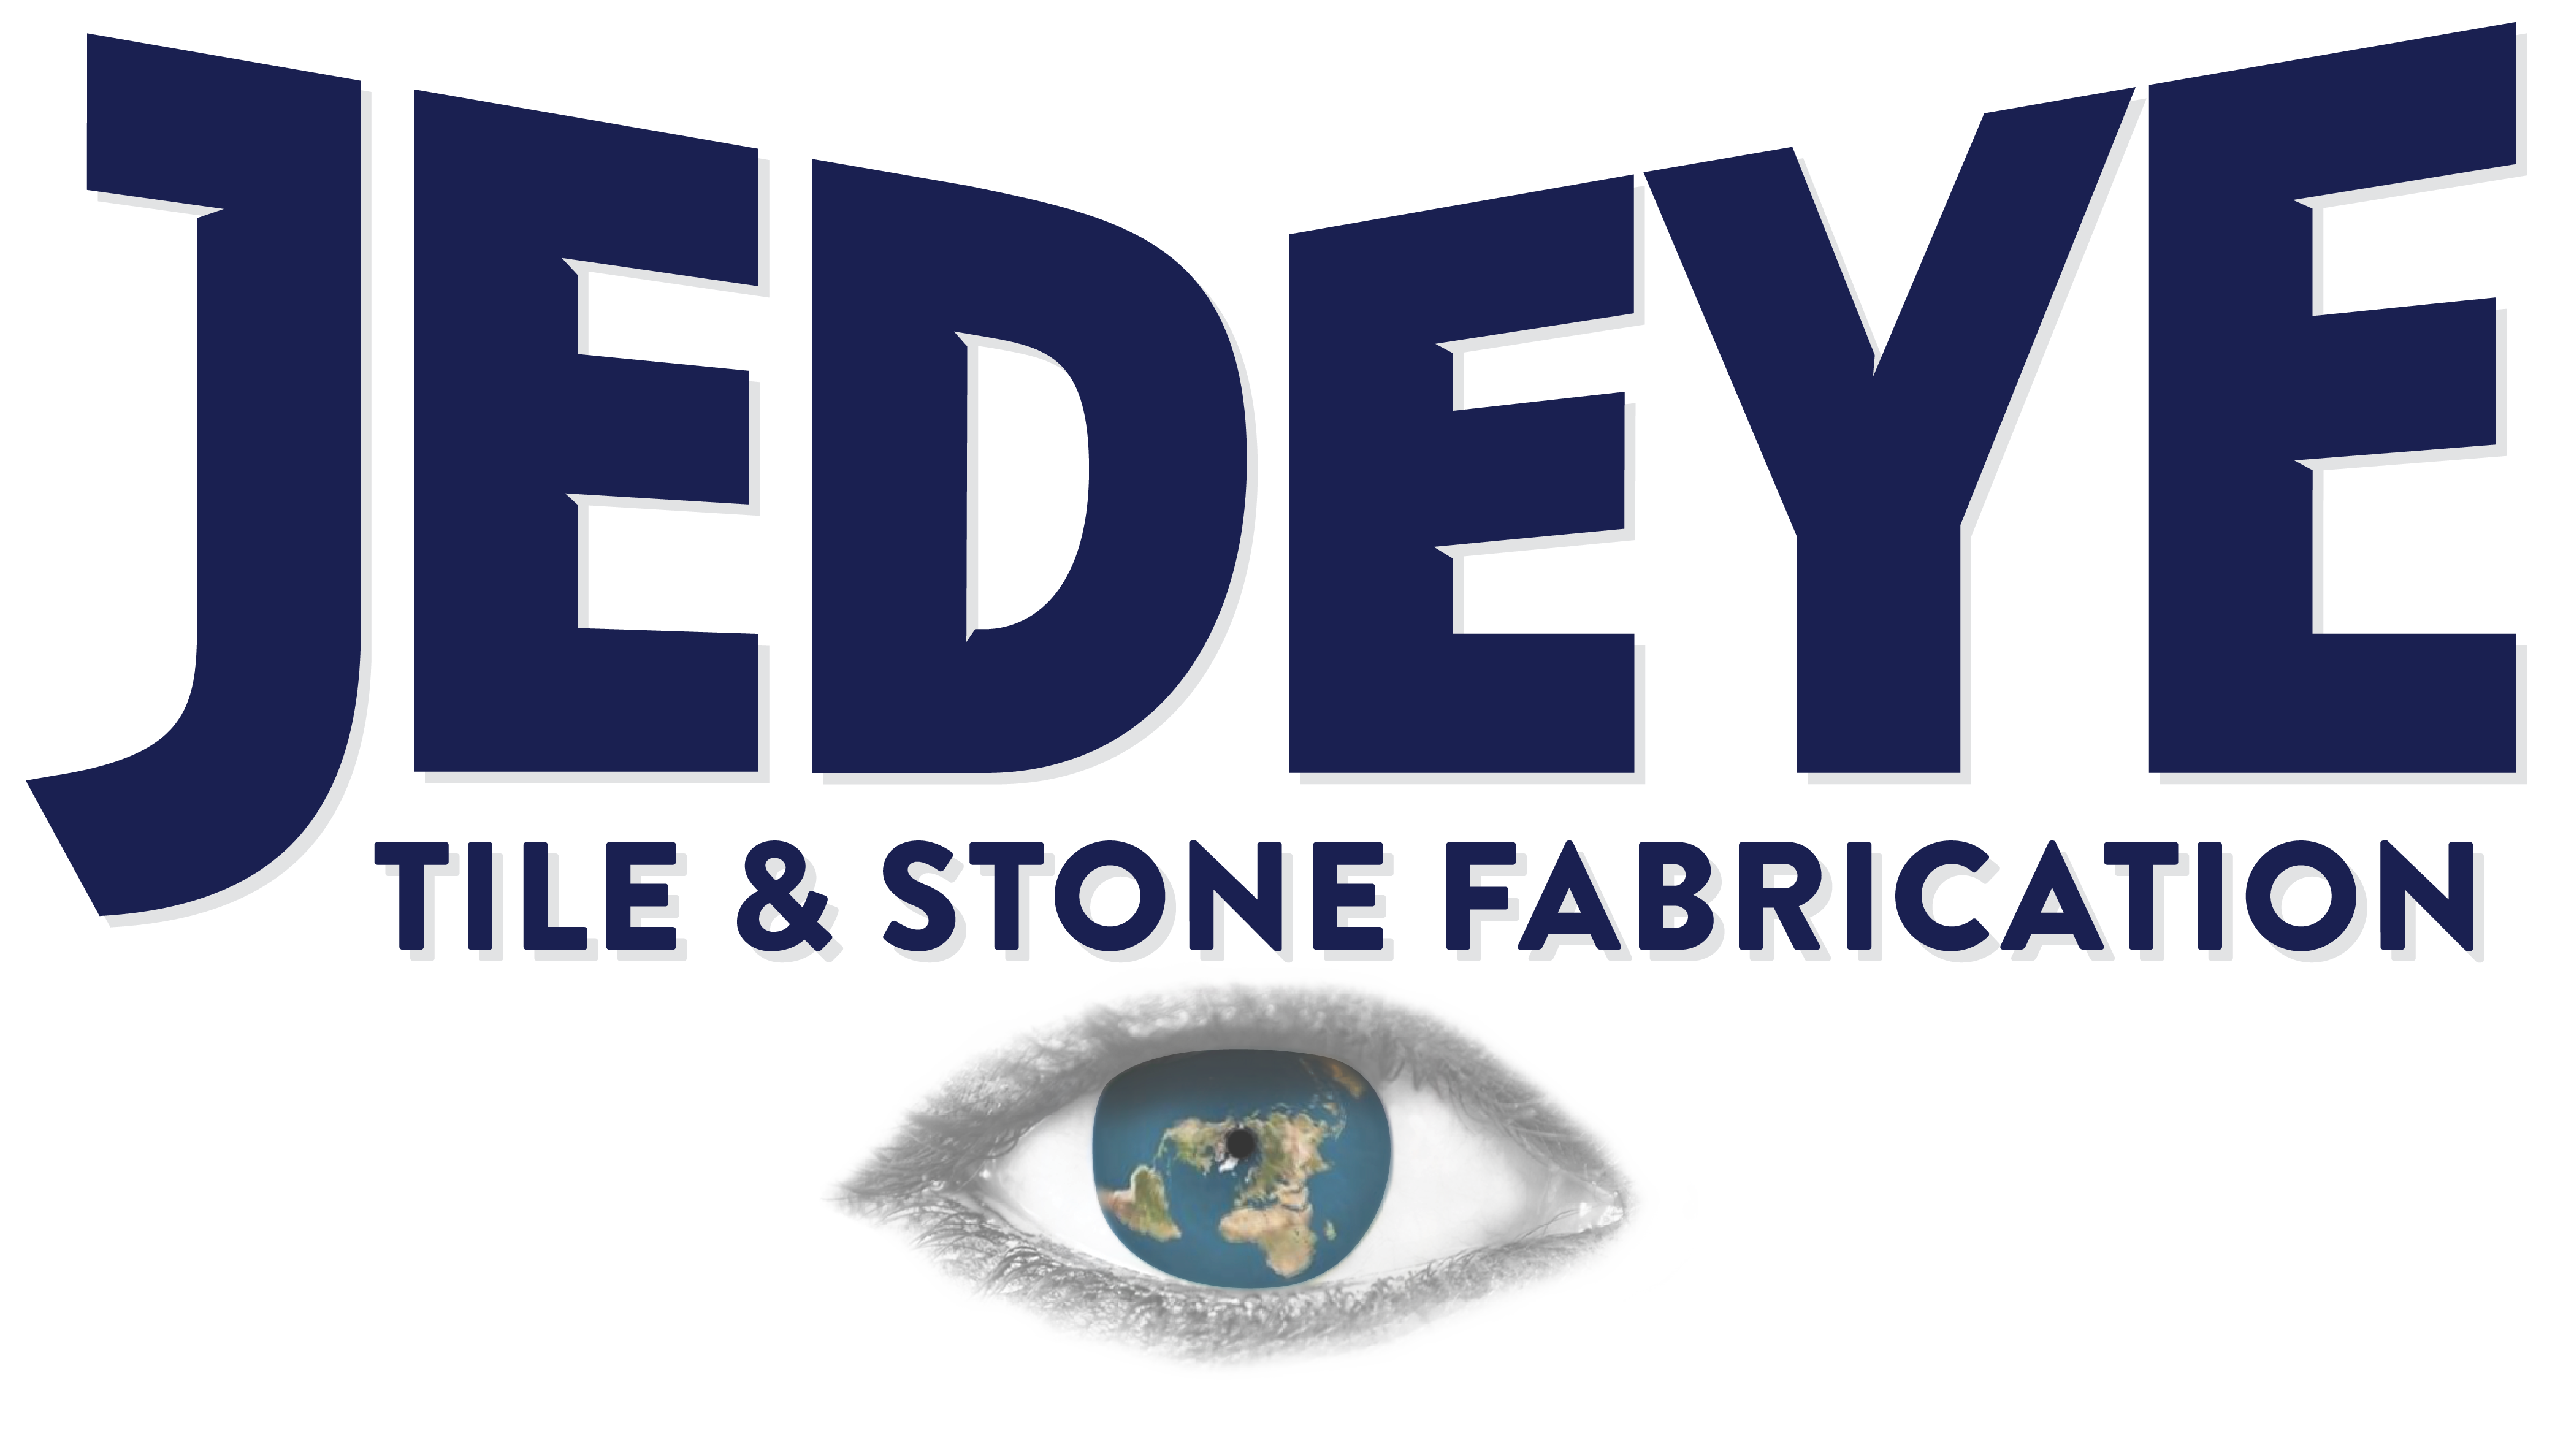 Jedeye Tile & Stone Fabrication